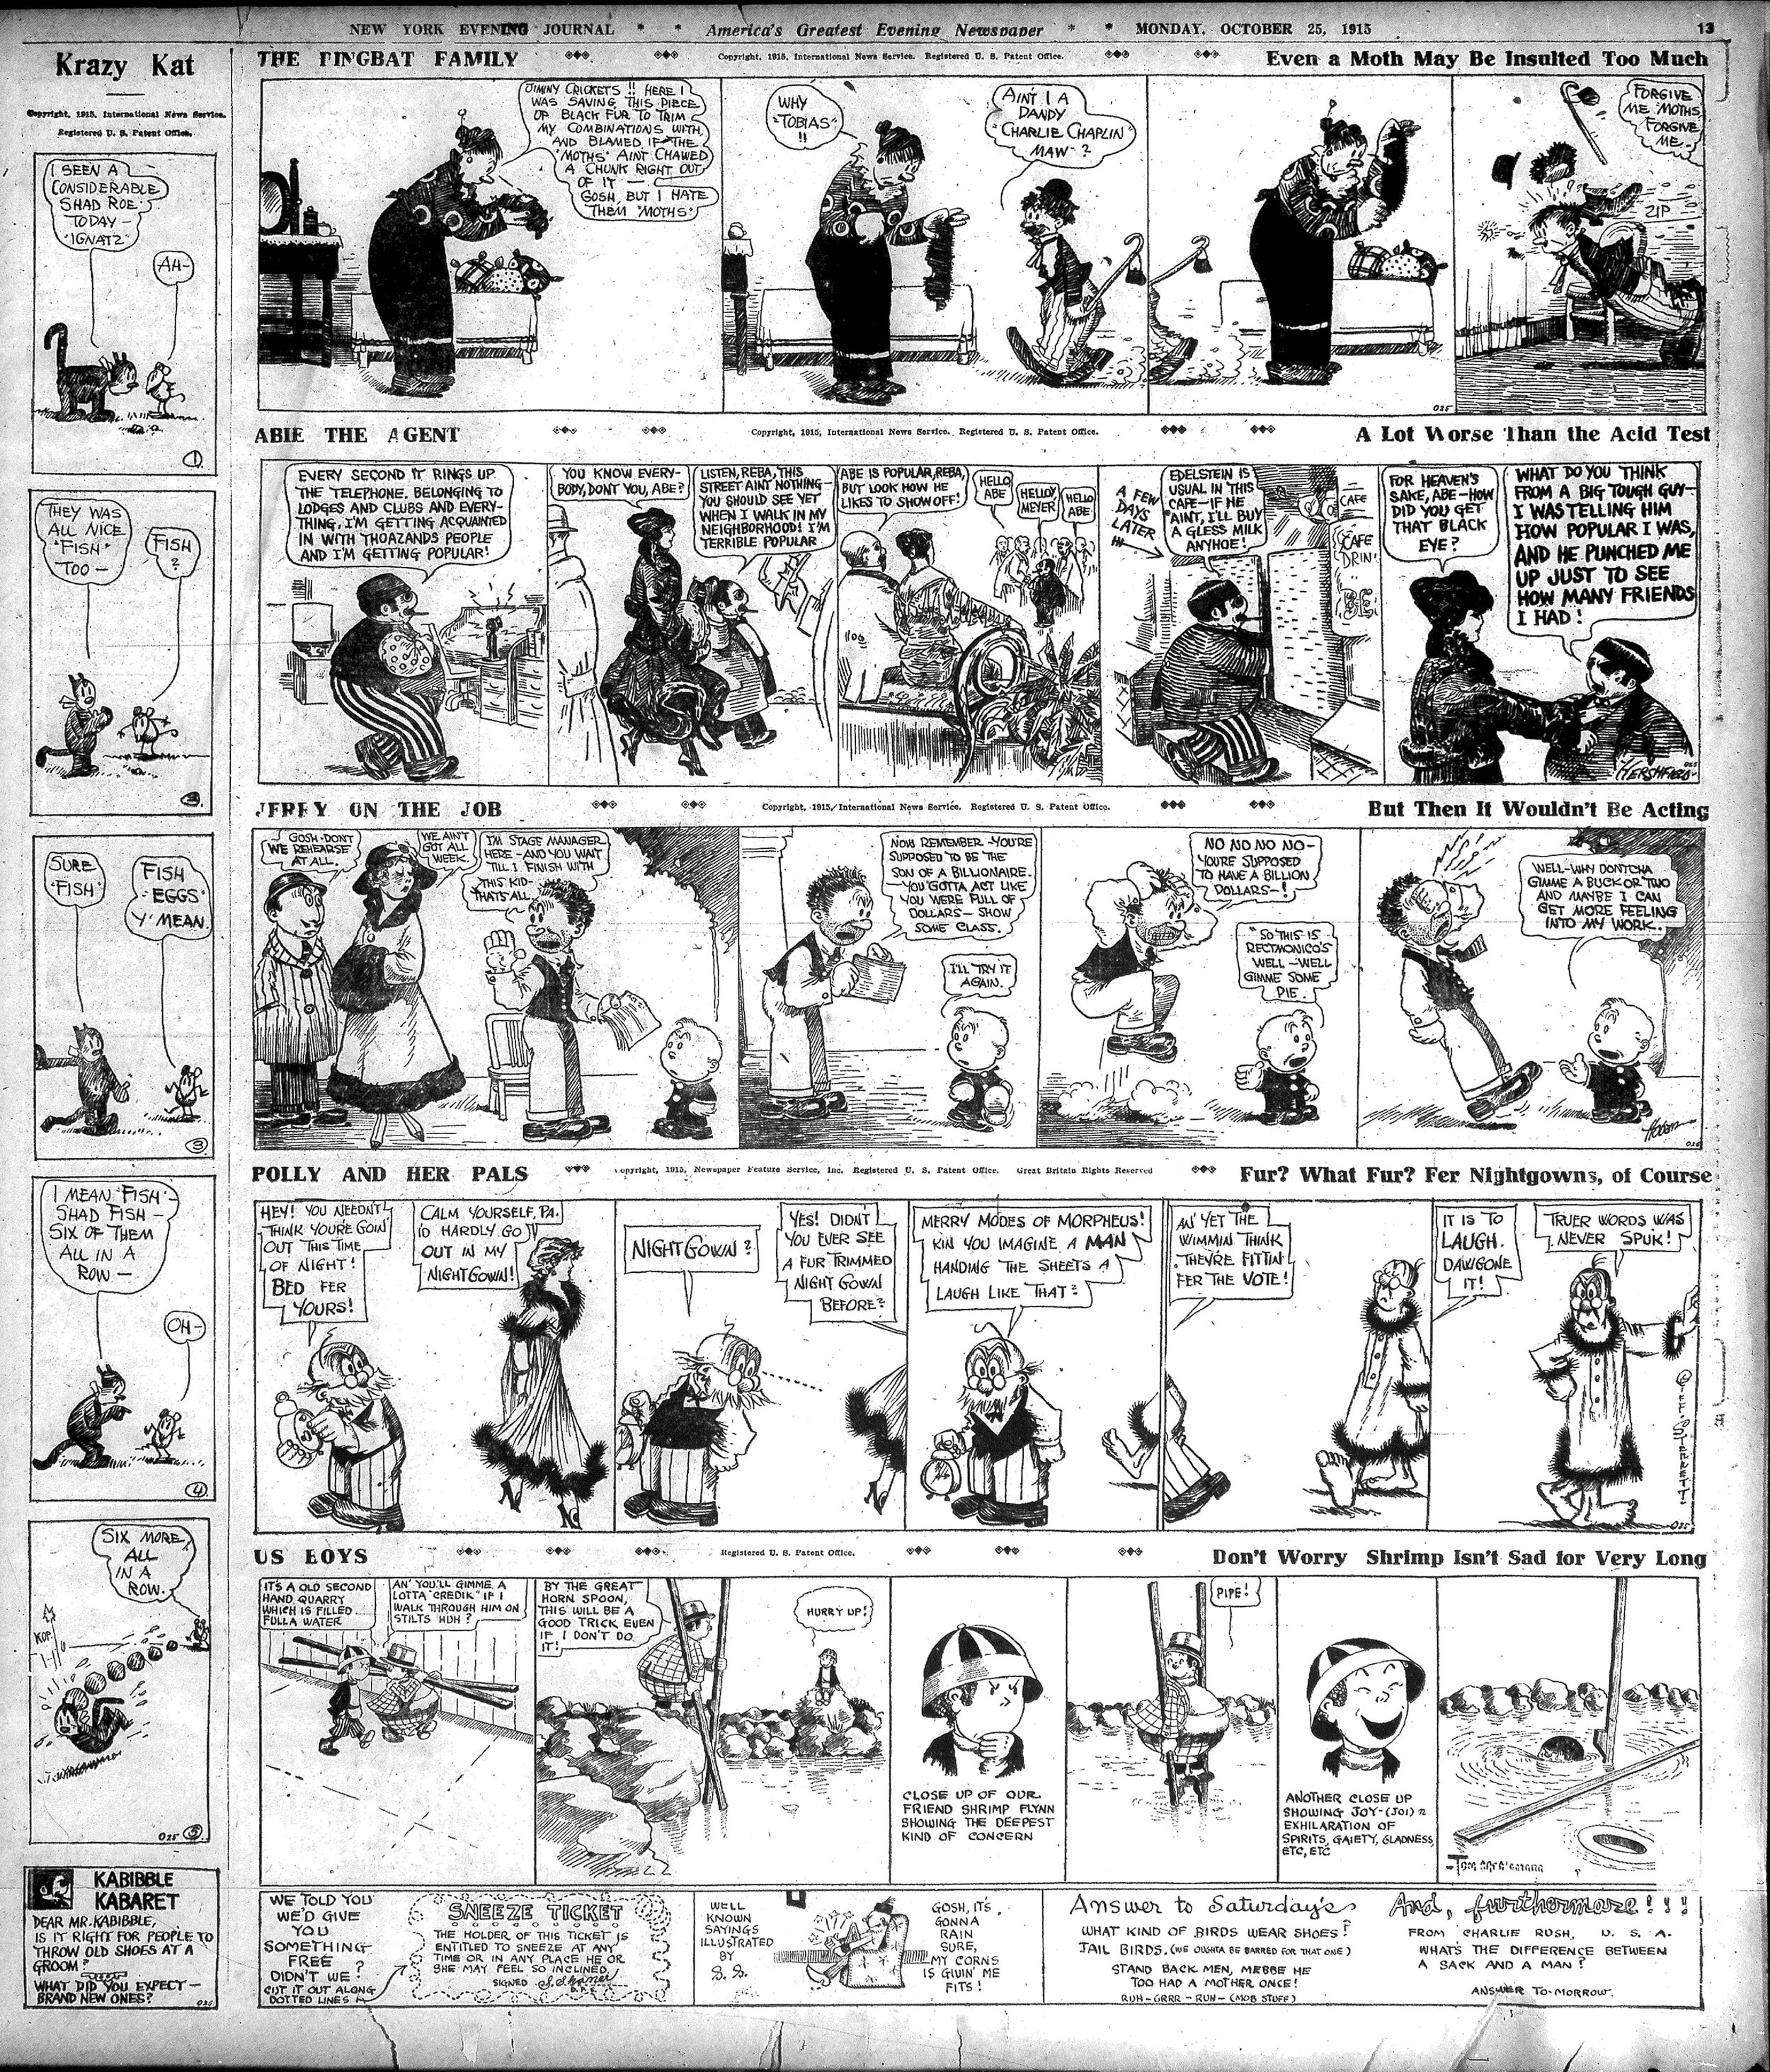 14-1915-10-25-nyej-comics-page-with-dingbat-gag-about-chaplin.jpg